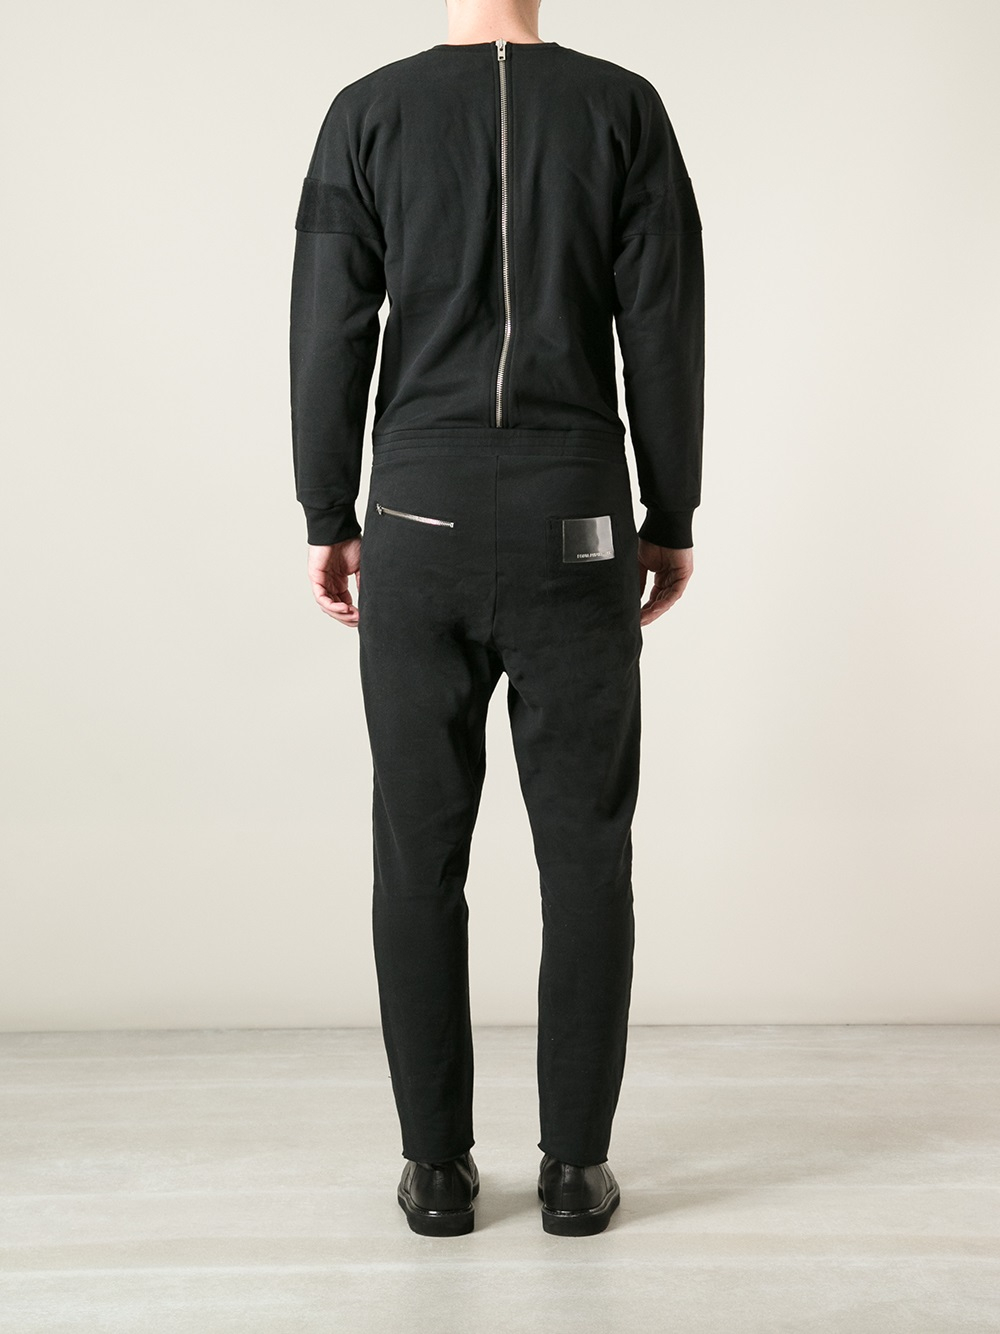 Lyst - Gosha Rubchinskiy Fine Knit Jumpsuit in Black for Men